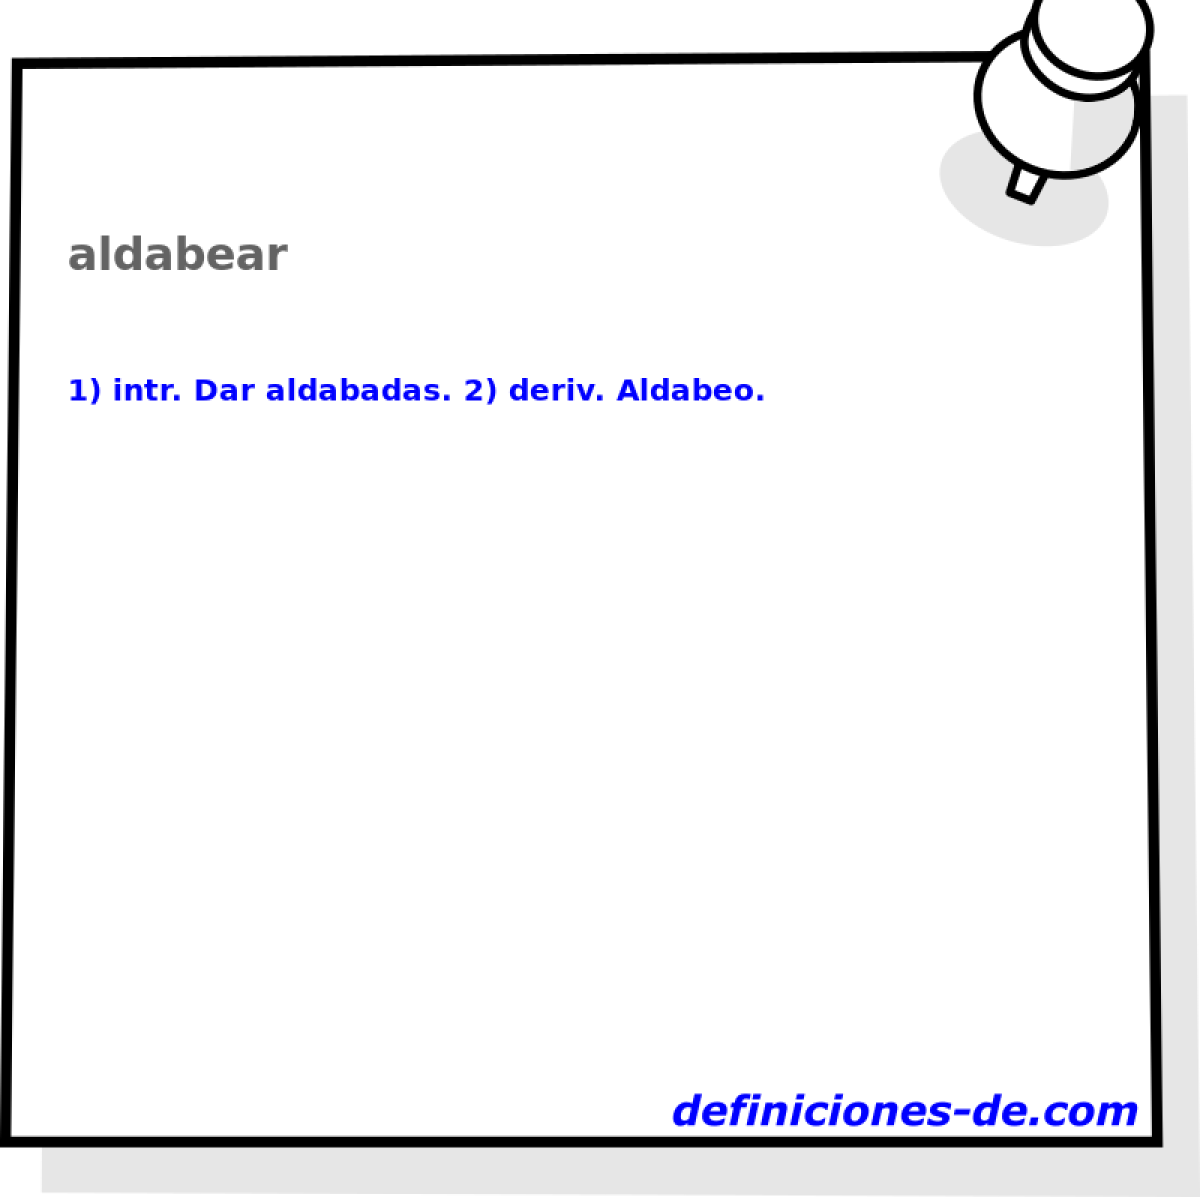 aldabear 